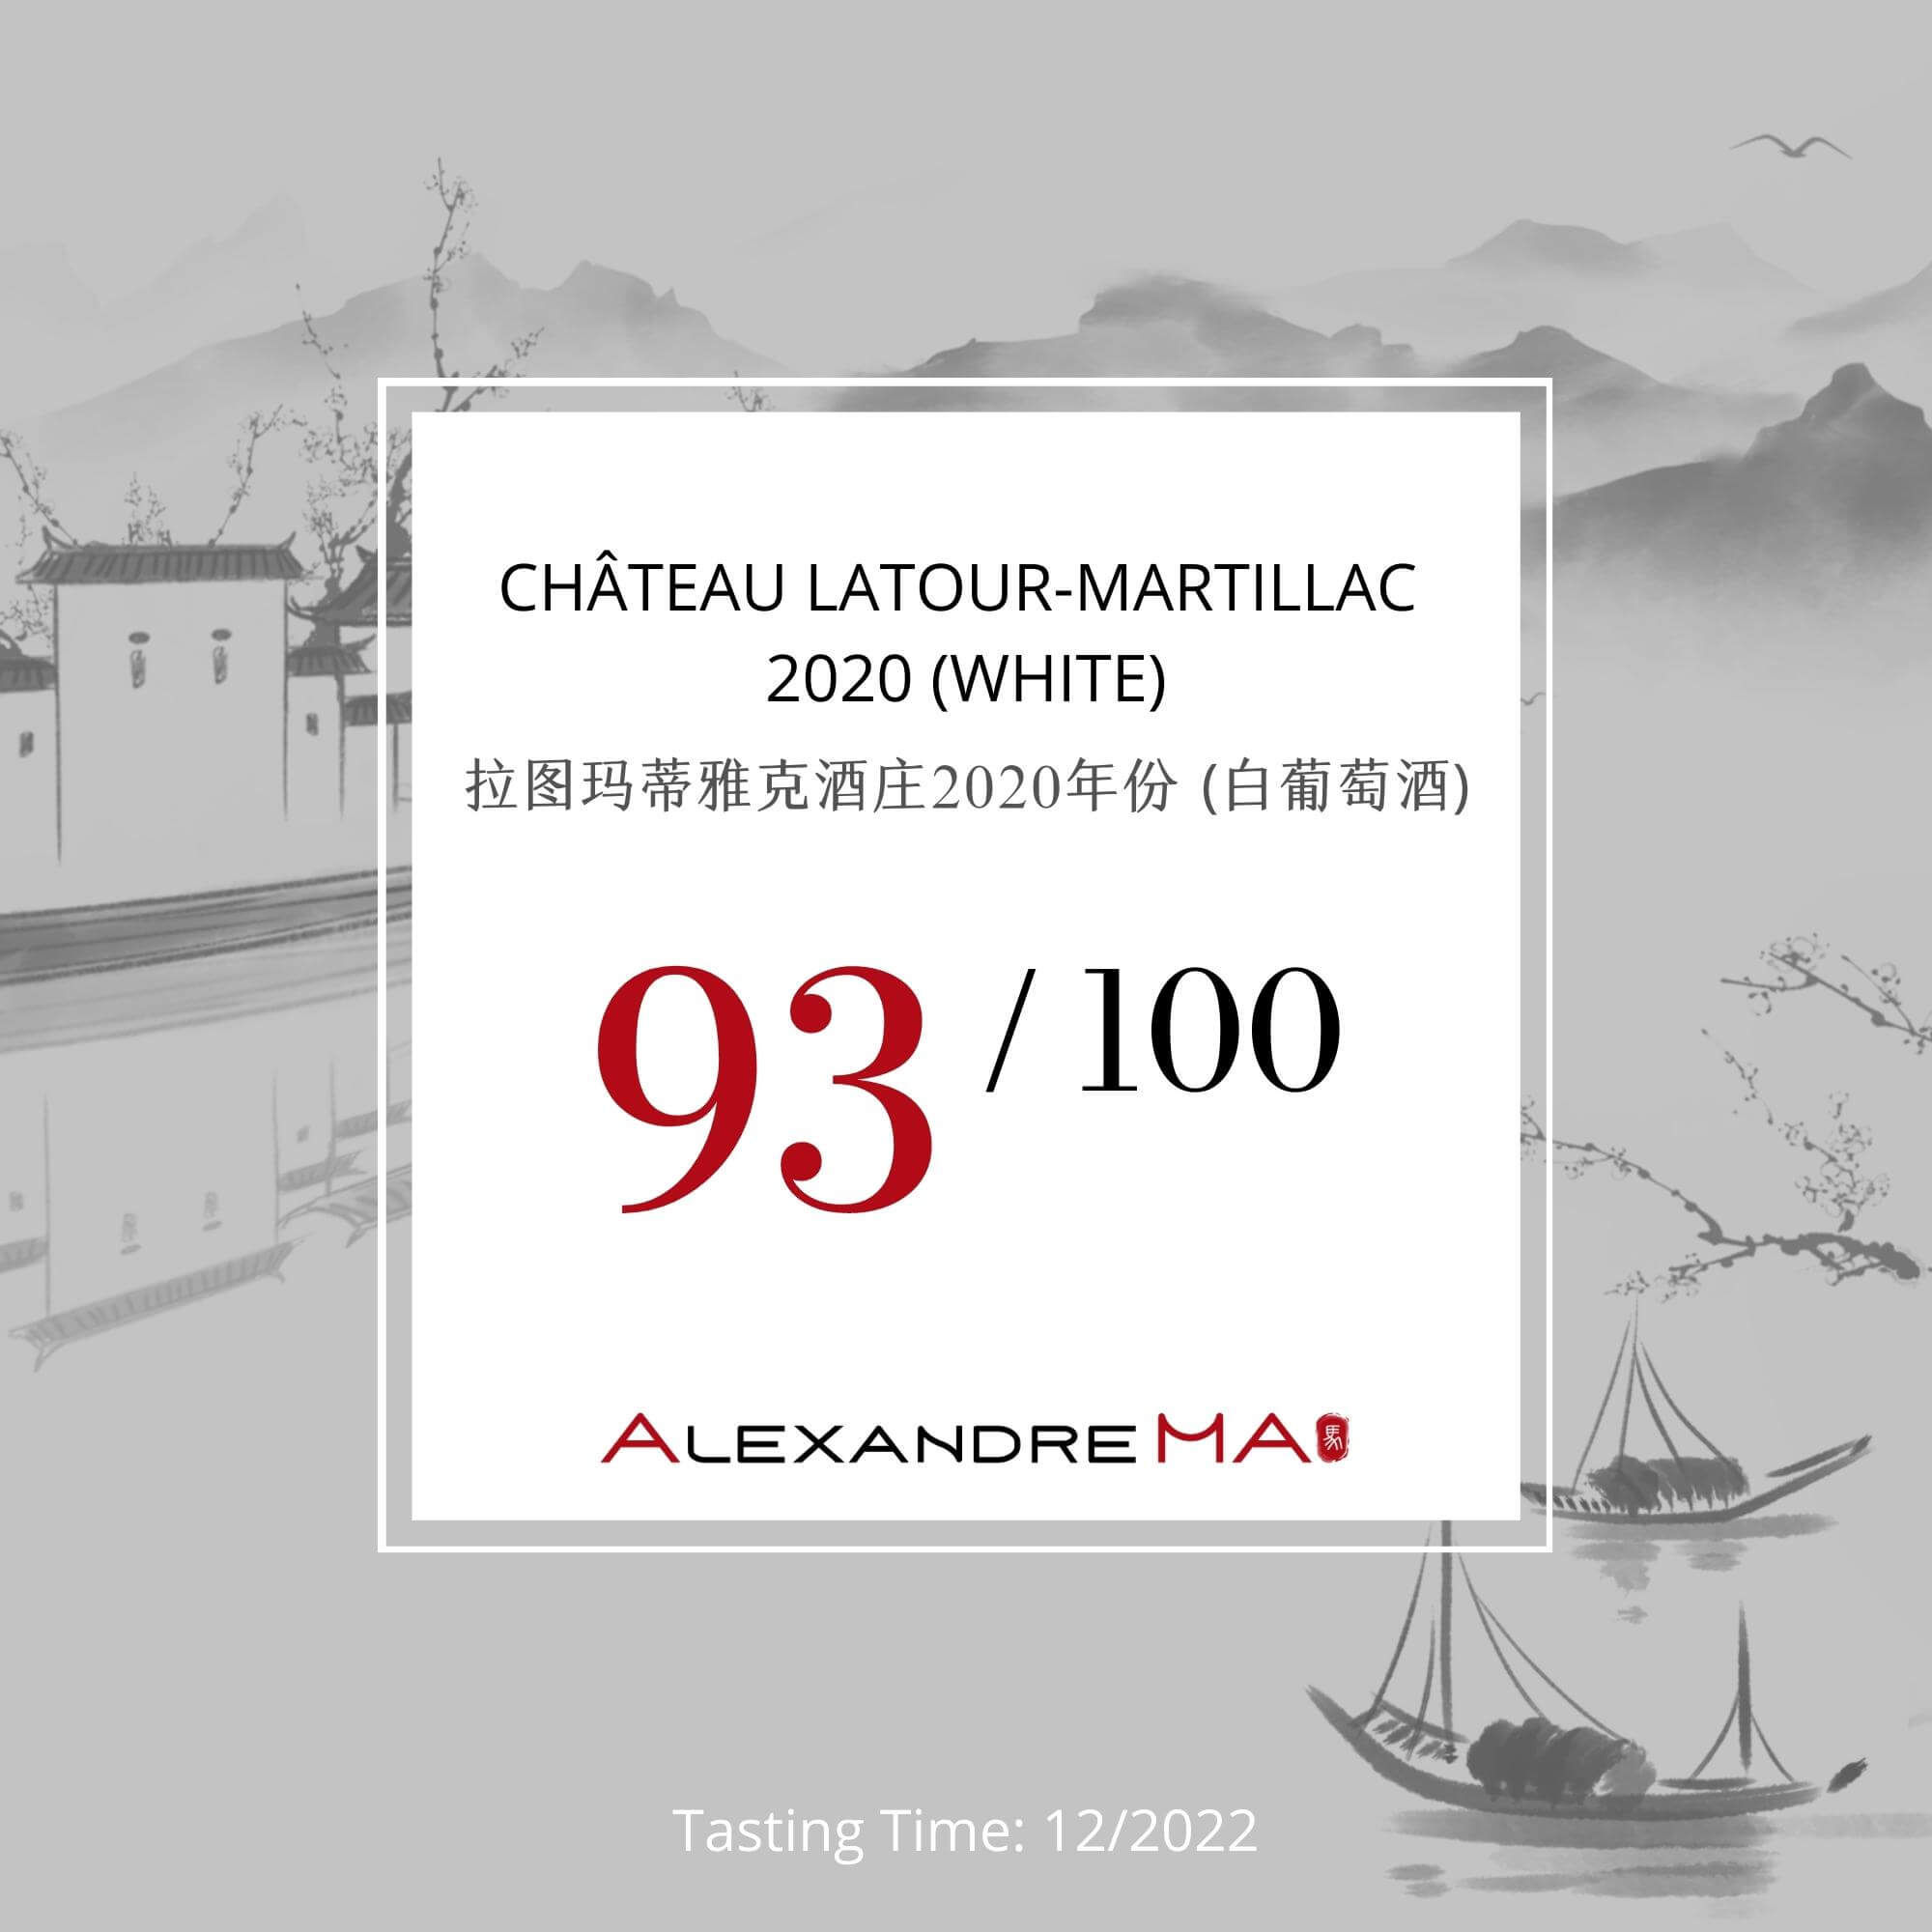 Château Latour-Martillac 2020-White - Alexandre MA